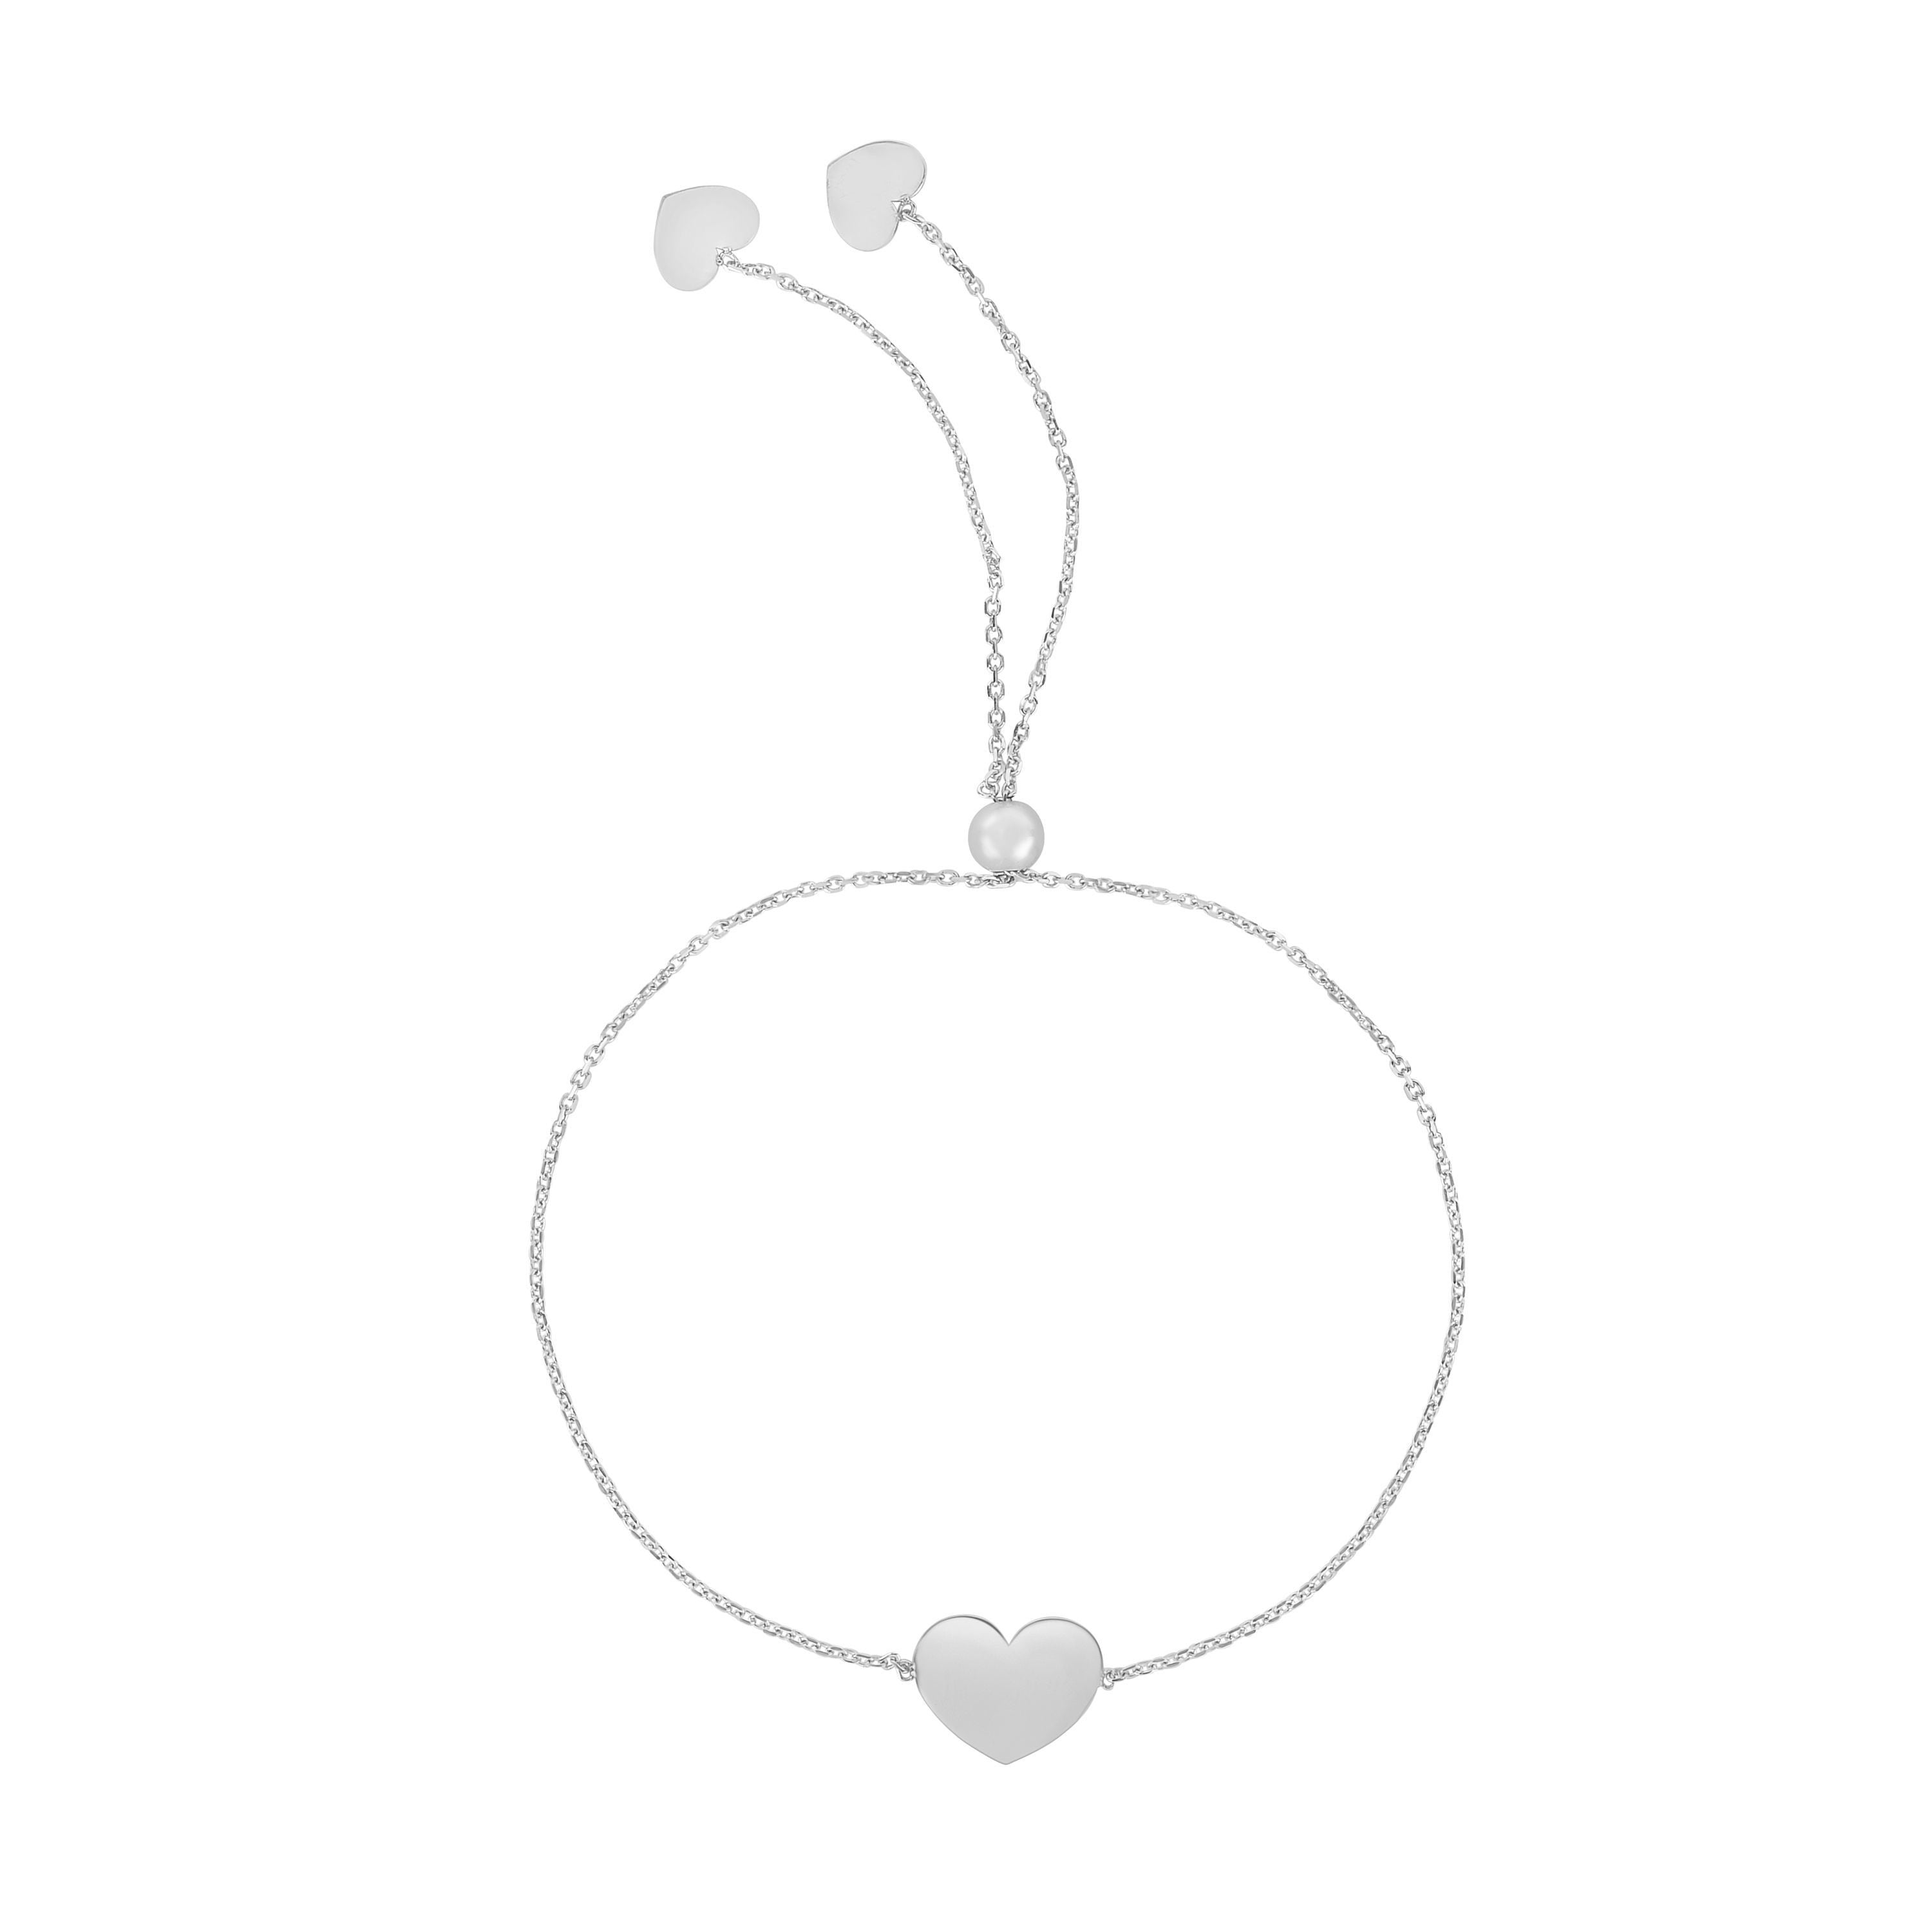 14k Minimalist Solid Gold Friendship Heart Love Adjustable Bracelet